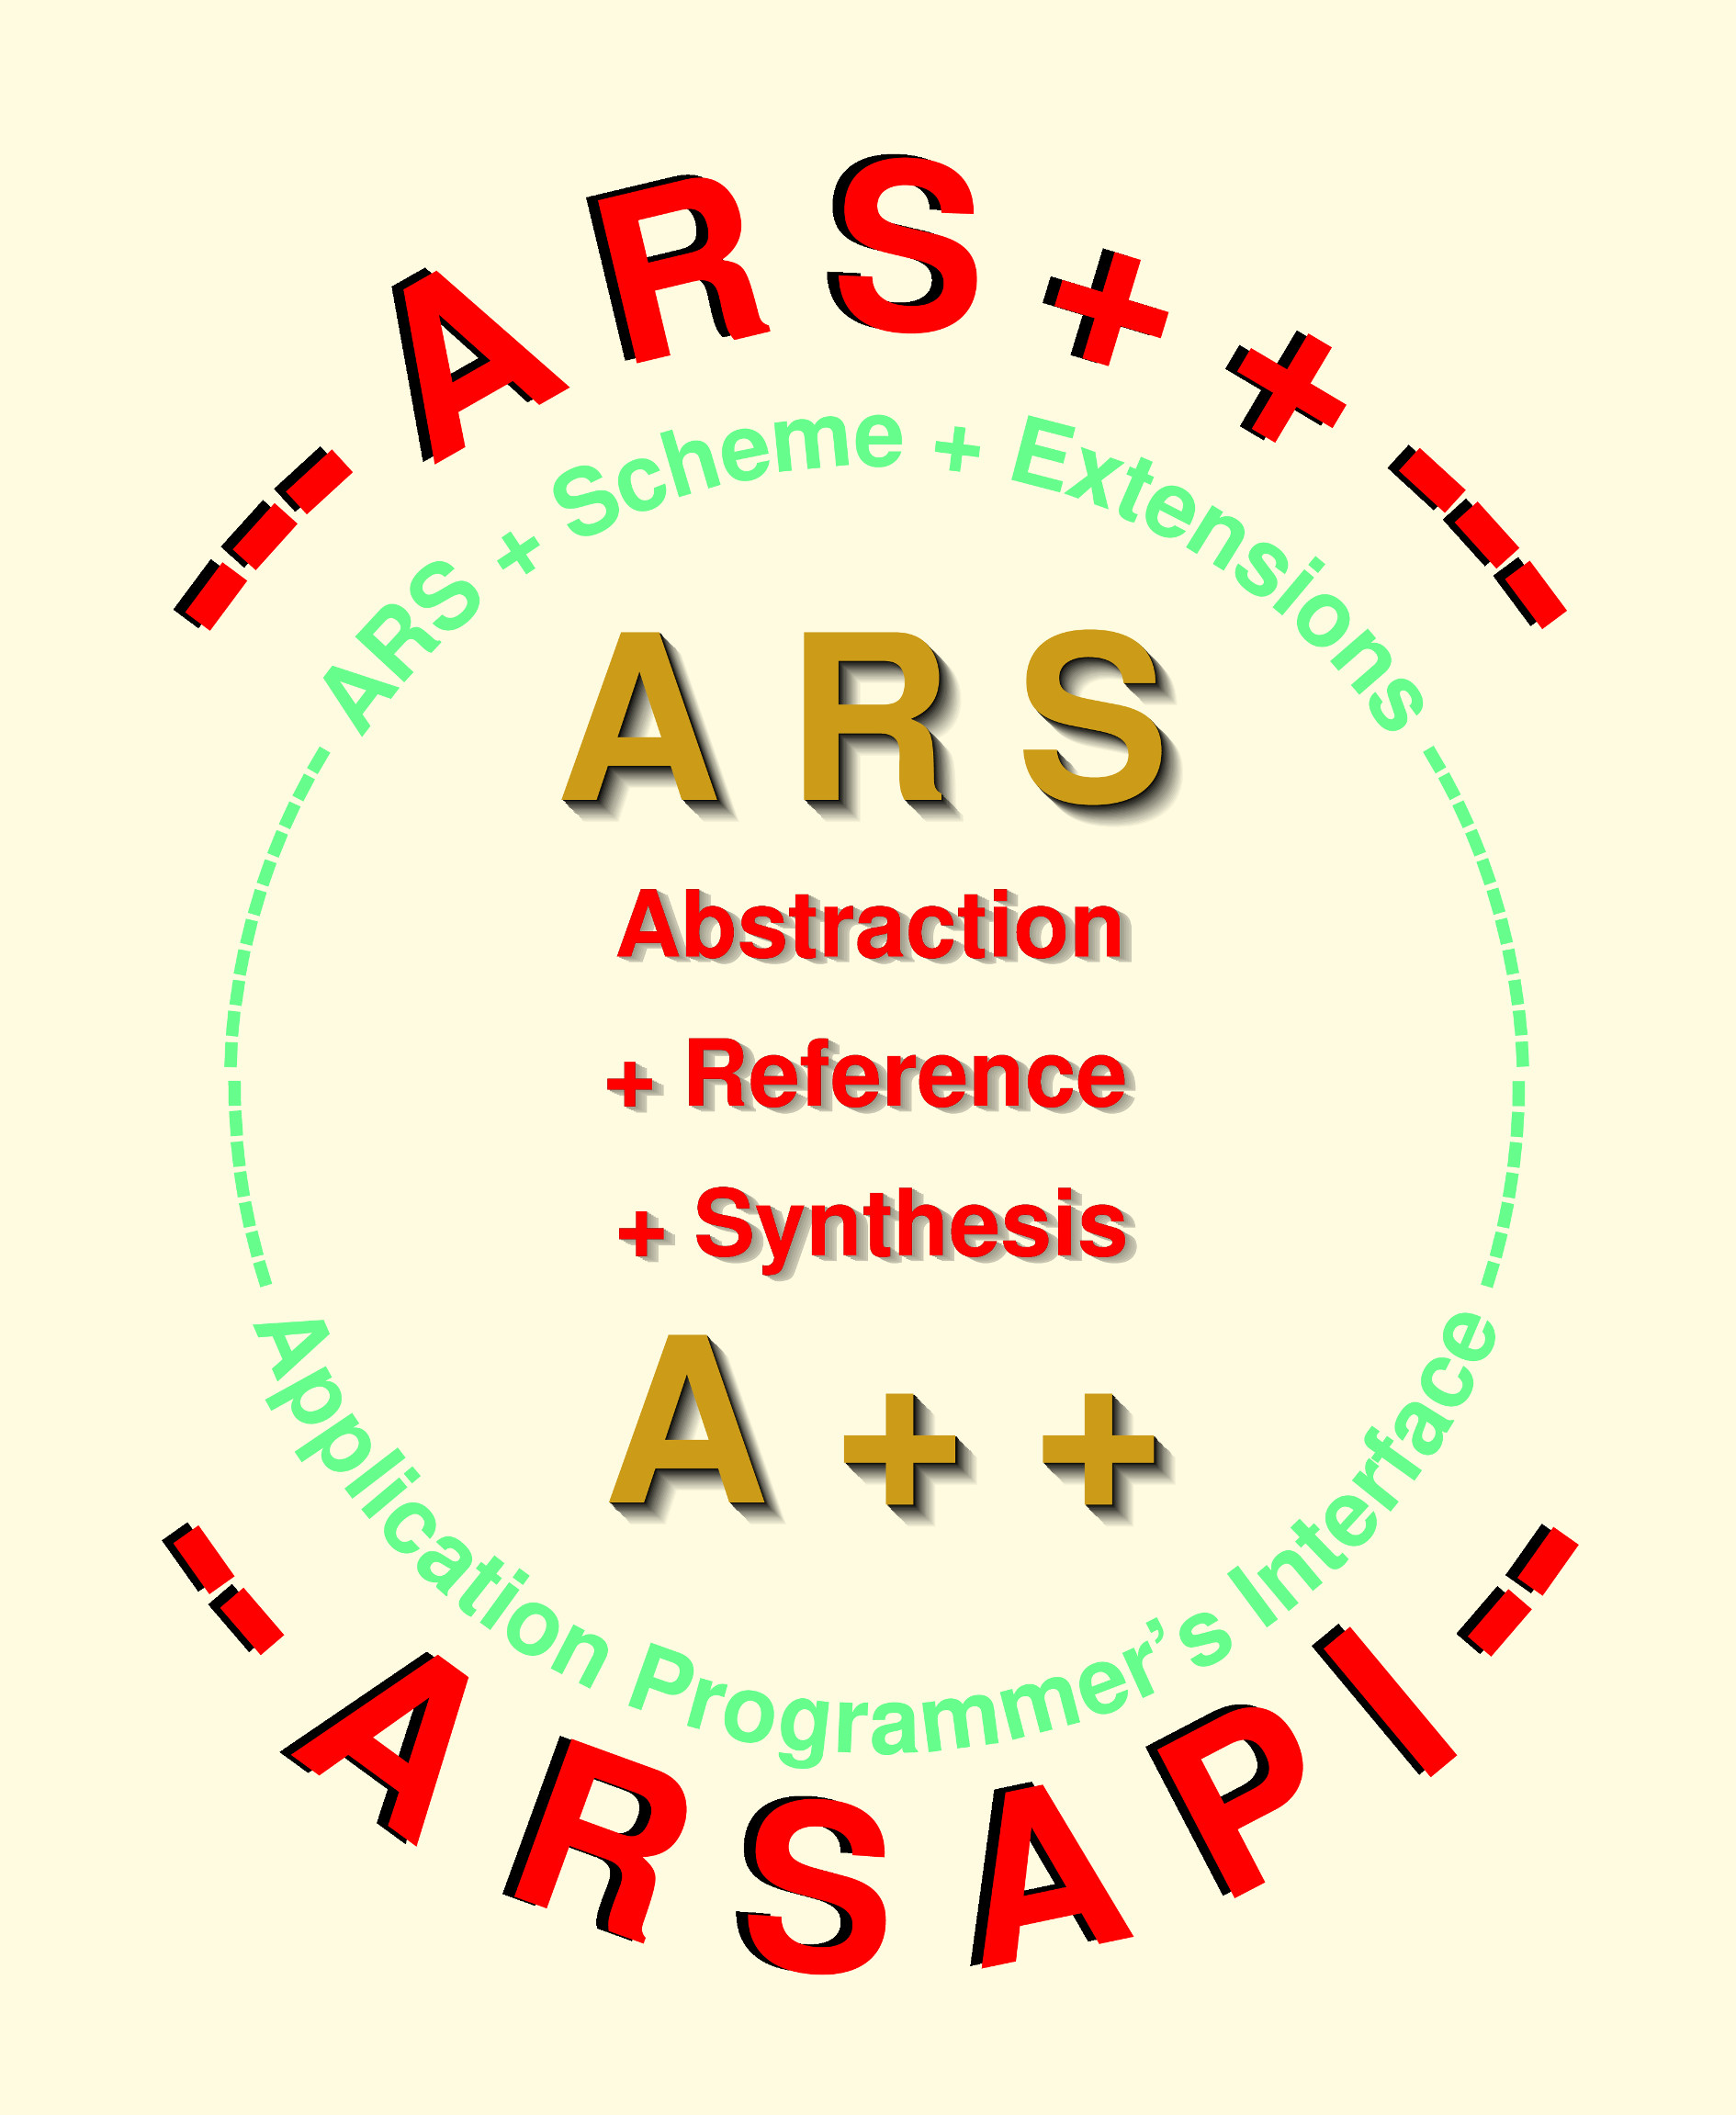 ARS ARS++ ARSAPI